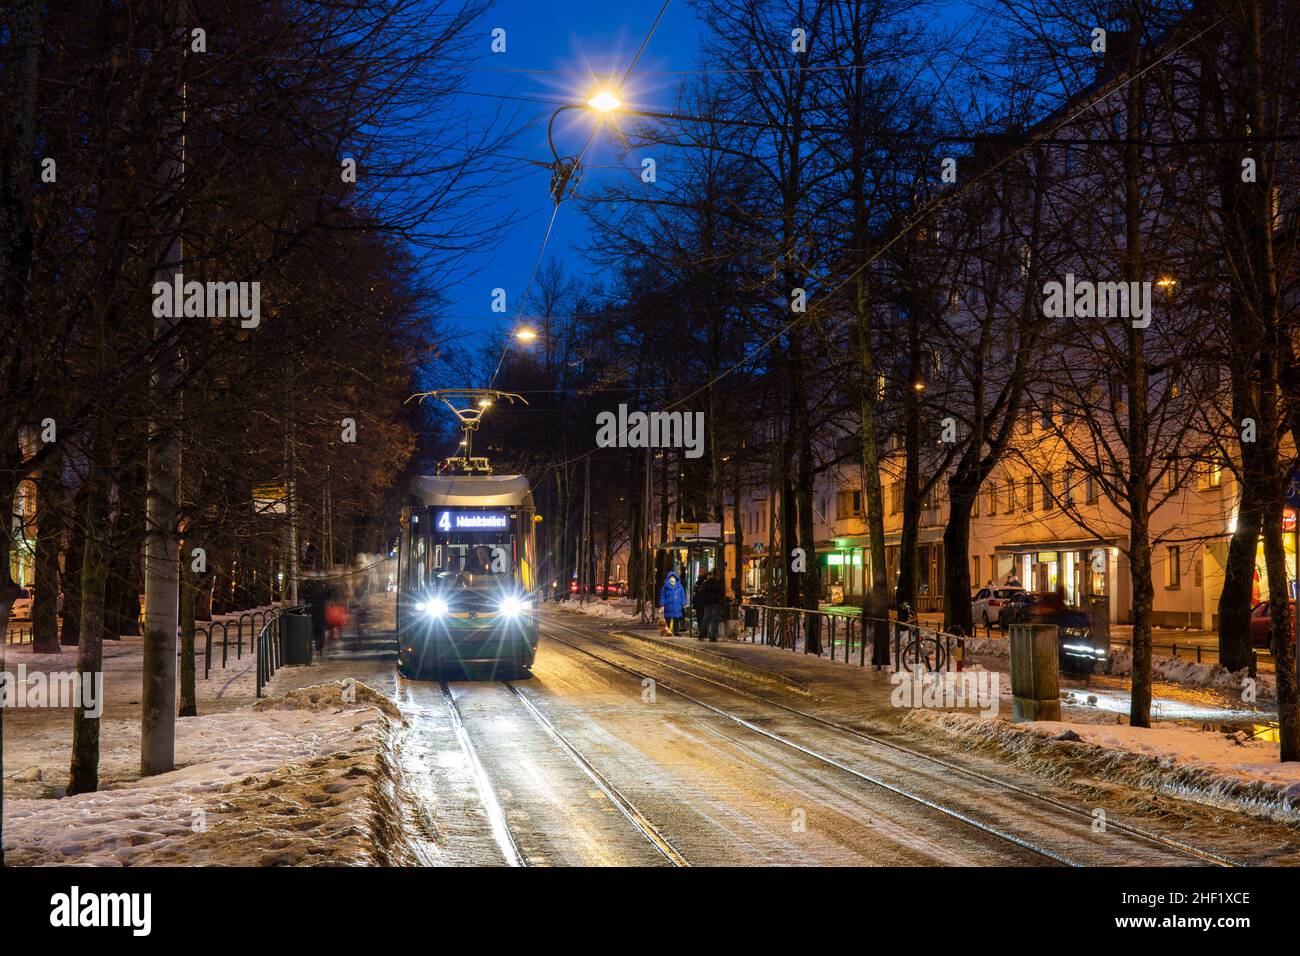 Tram on line 4 at Laajalahden aukio tram stop after dark in Munkkiniemi district of Helsinki, Finland Stock Photo